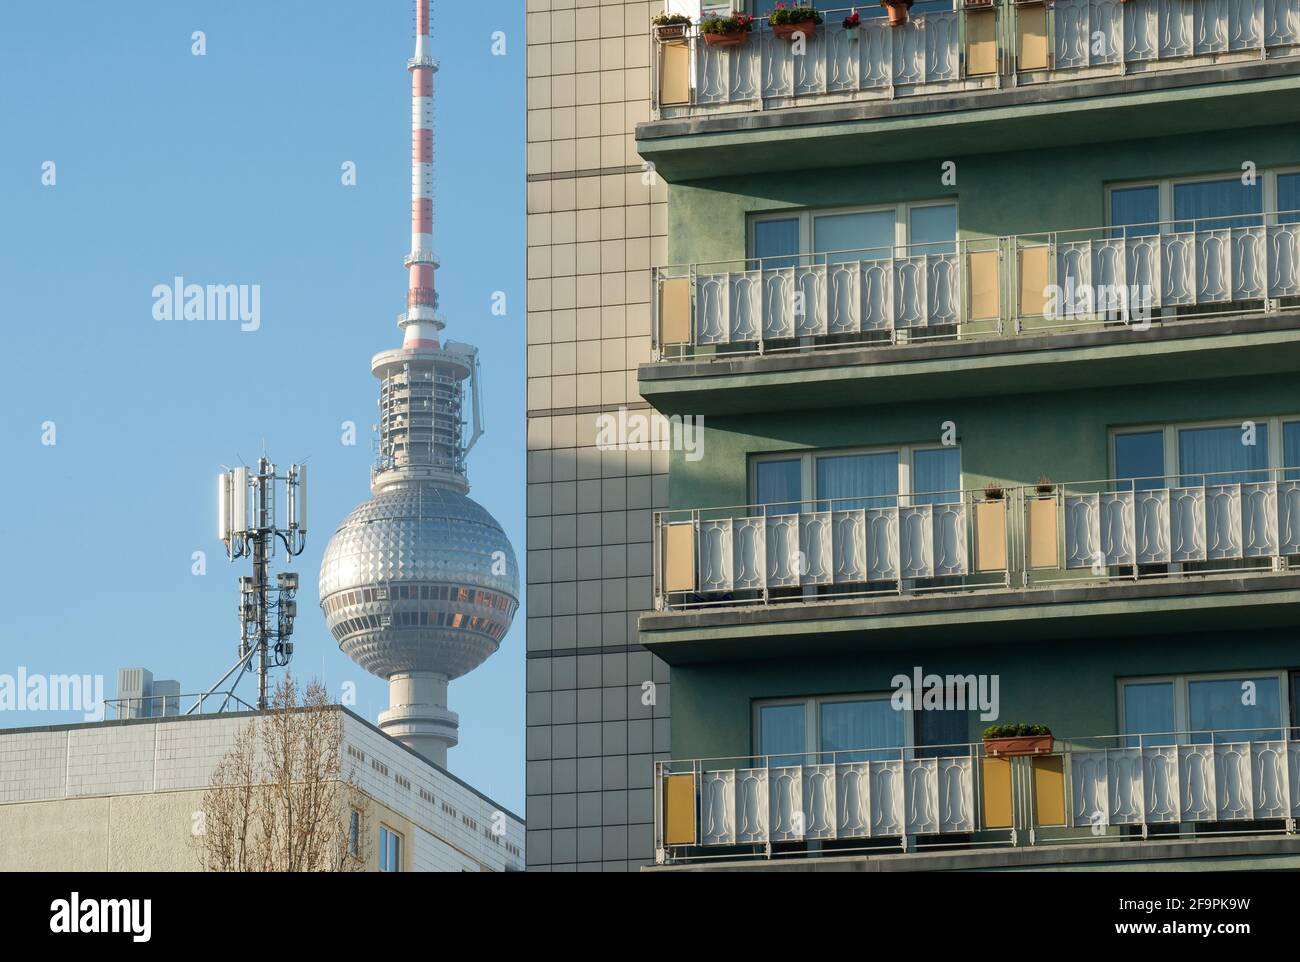 05.12.2019, Berlin, Berlin, Germany - Mitte - Residential buildings in the East Berlin city center. 0CE191205D005CAROEX.JPG [MODEL RELEASE: NOT APPLIC Stock Photo